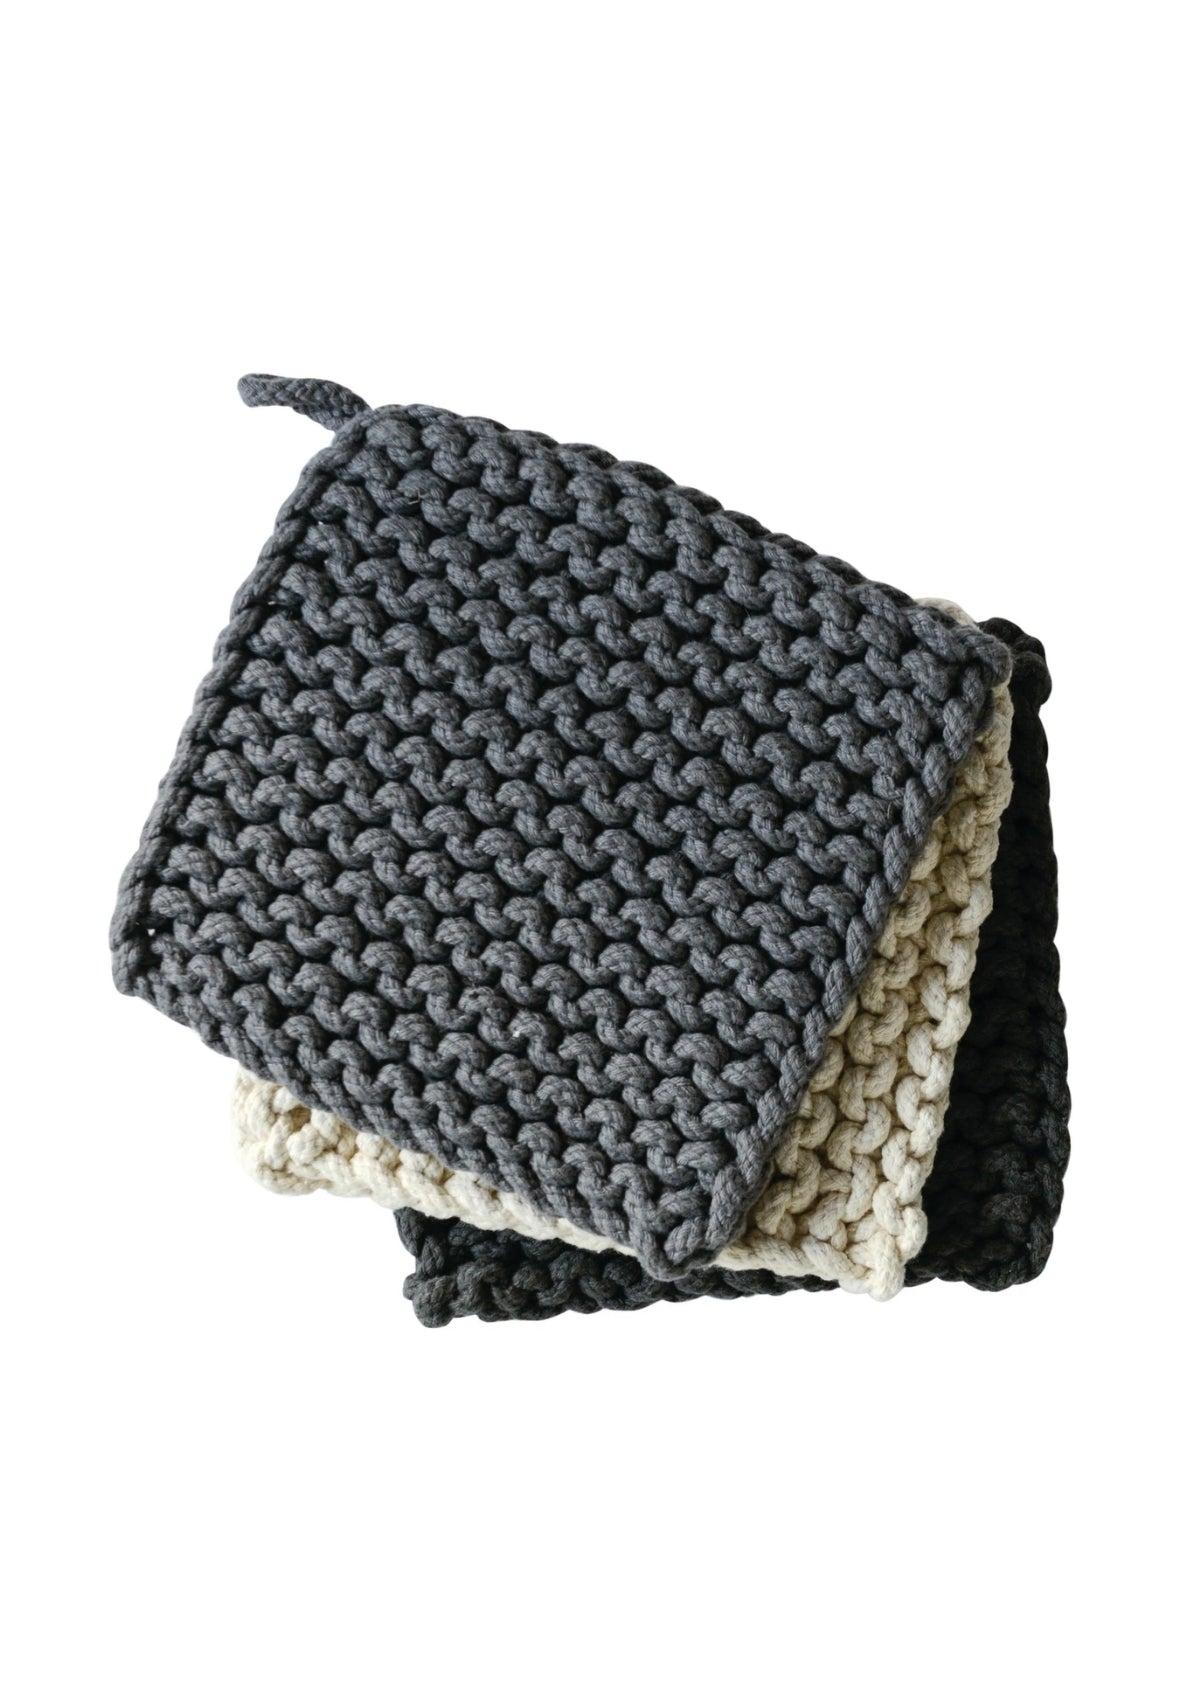 8" Square Crocheted Cotton Pot Holder